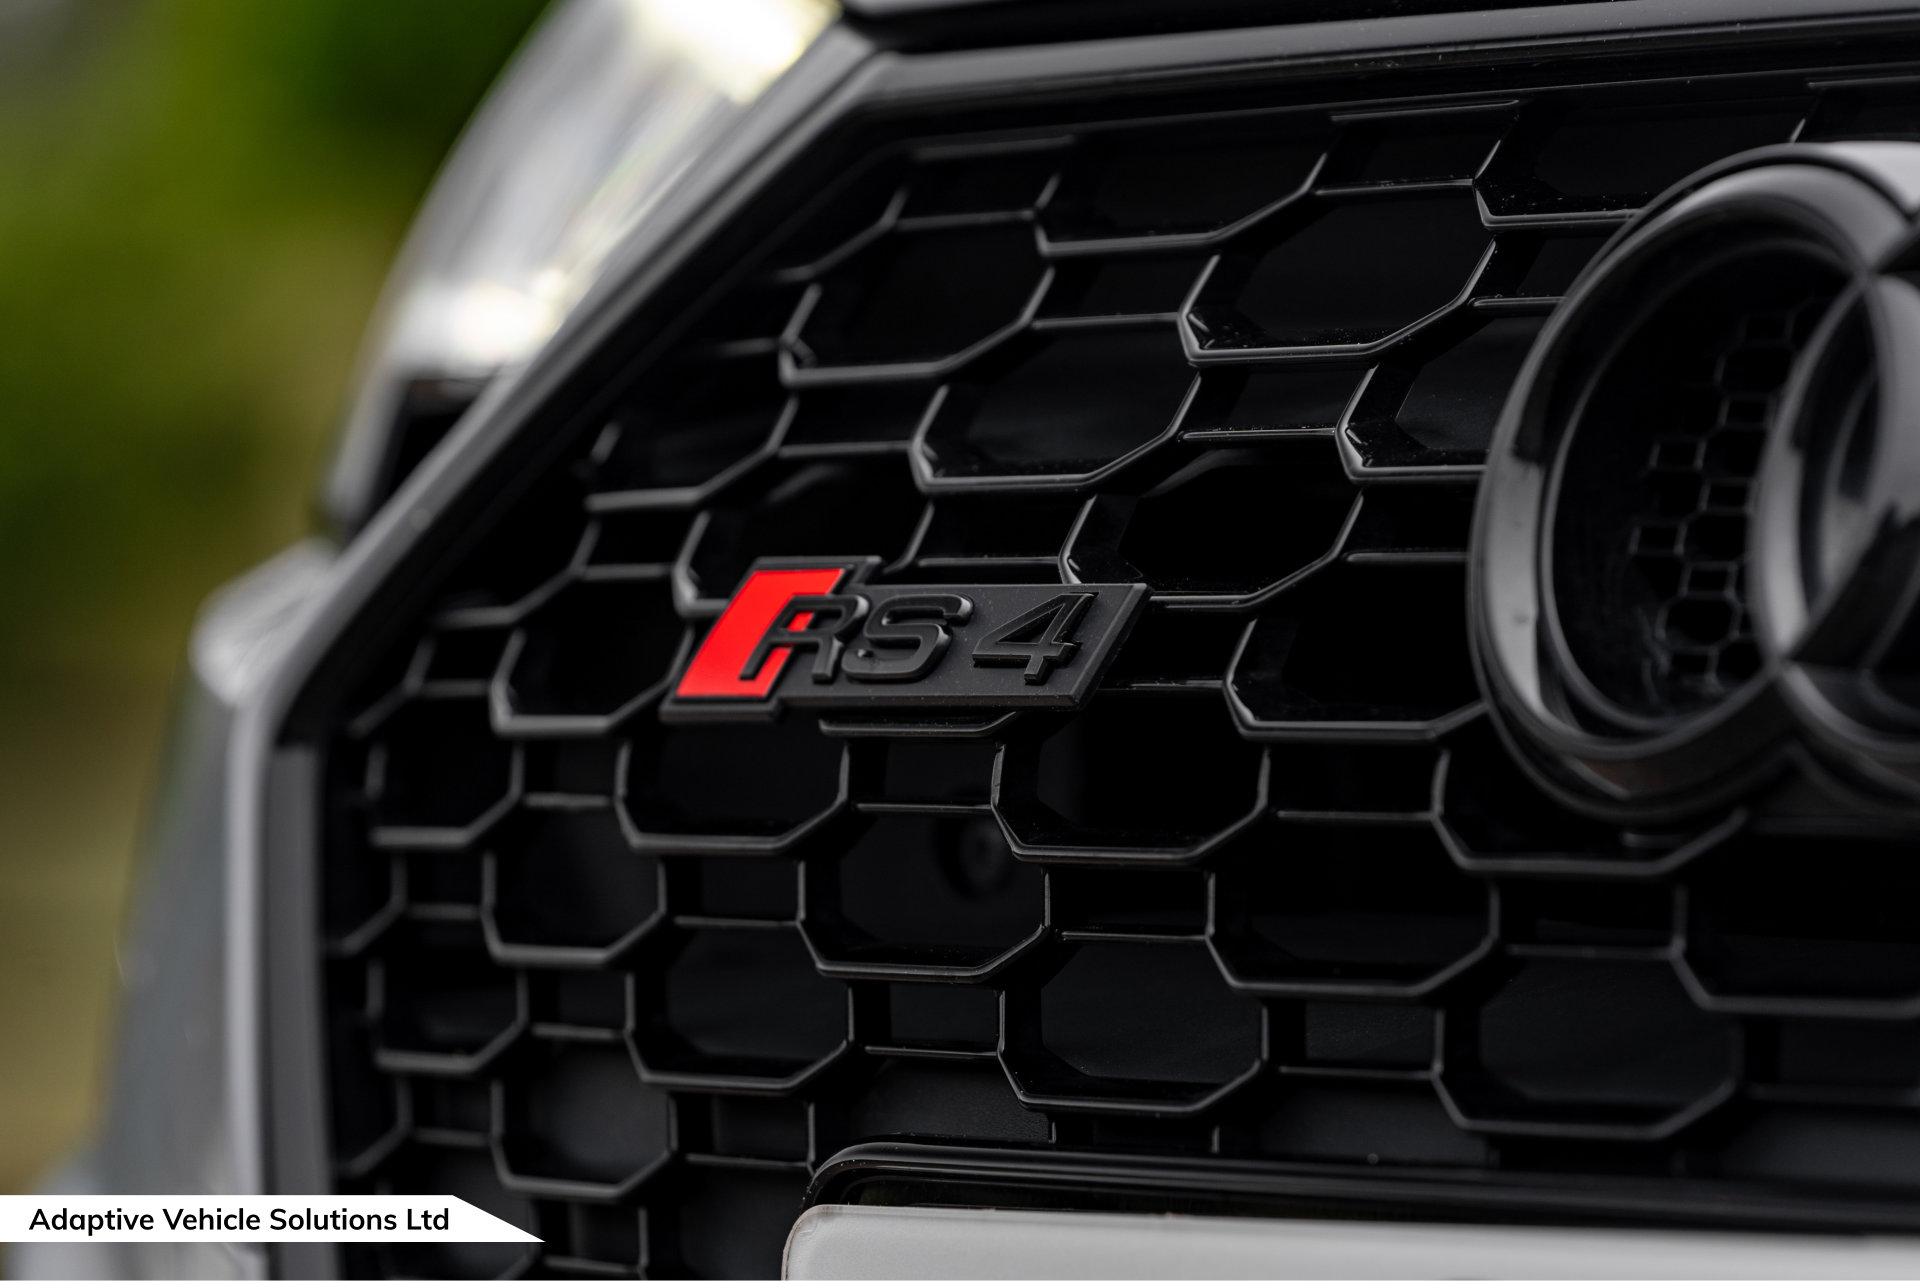 2019 Audi RS4 Avant Sport Edition Nardo Grey grille badge